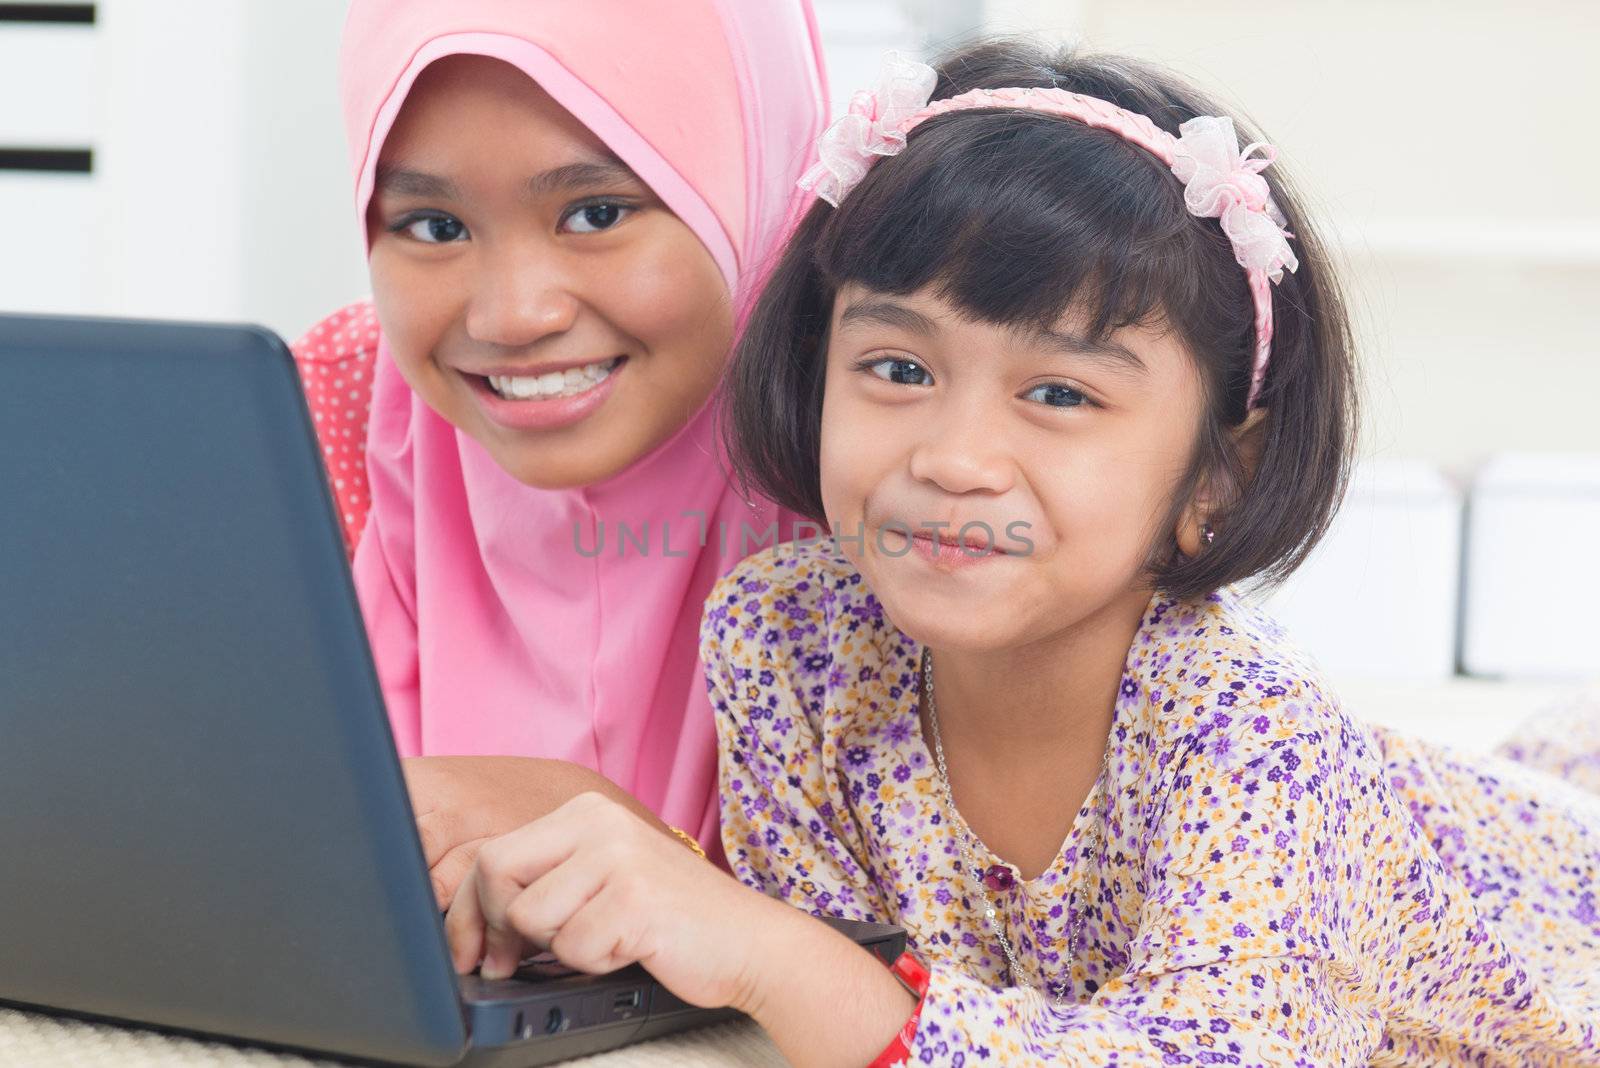 Southeast Asian children surfing internet at home. Malay Muslim girls